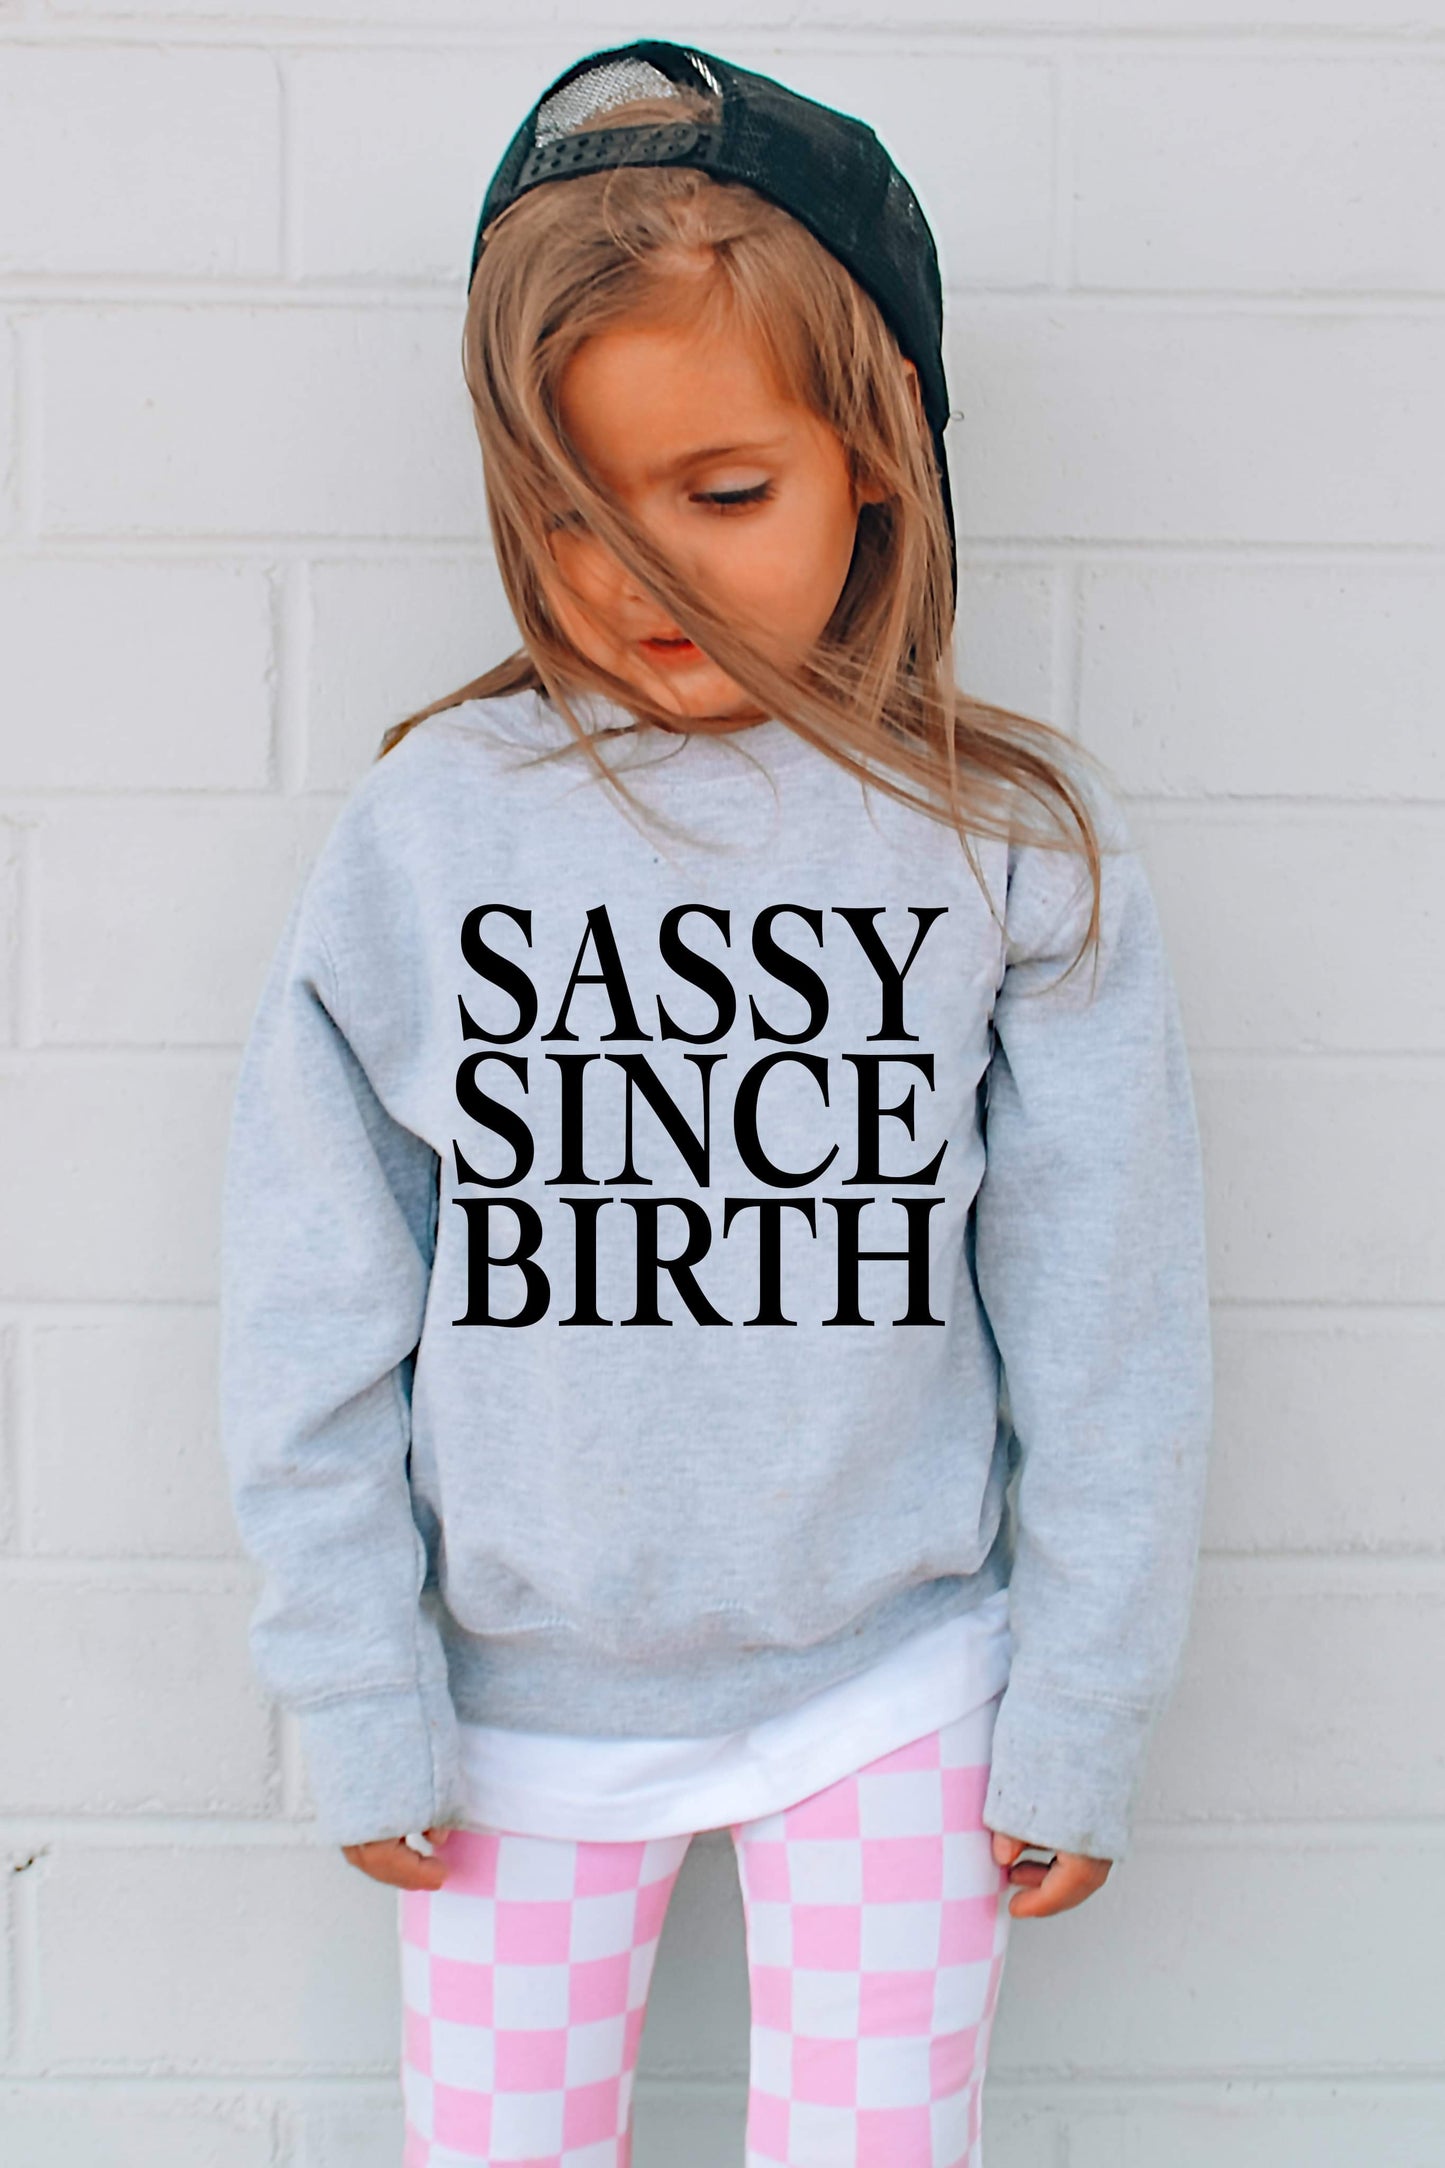 Sassy Since Birth sweatshirt preorder